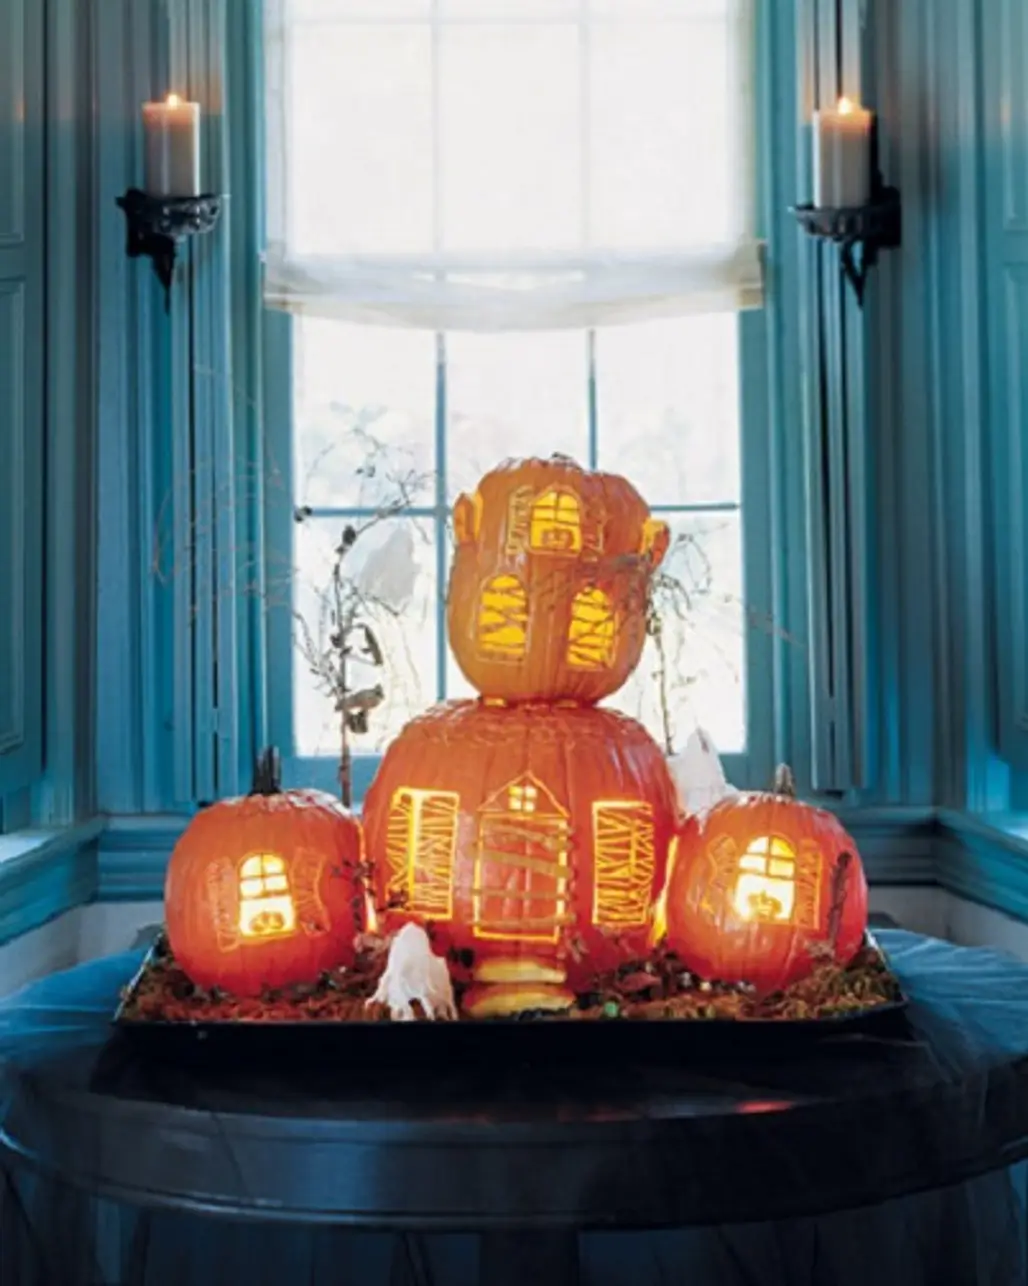 Spooky Haunted House Pumpkin Carving Ideas...